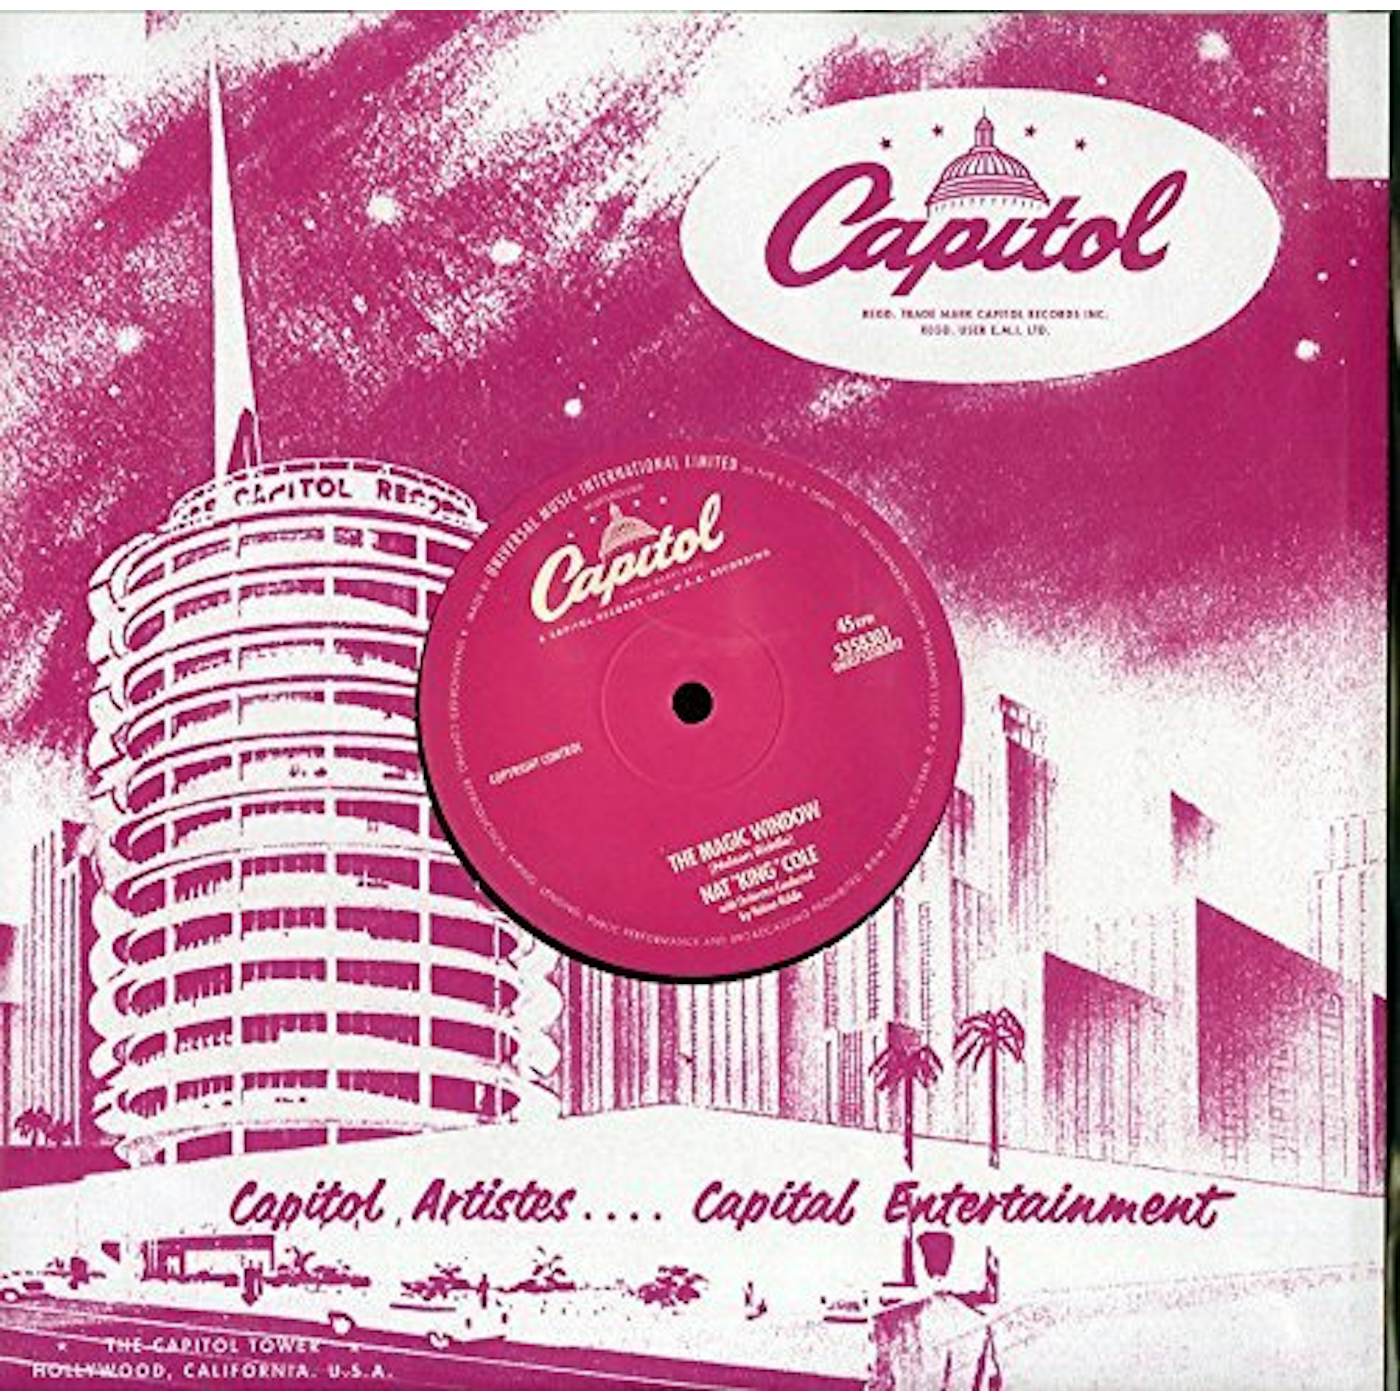 Nat King Cole Unforgettable Vinyl Record